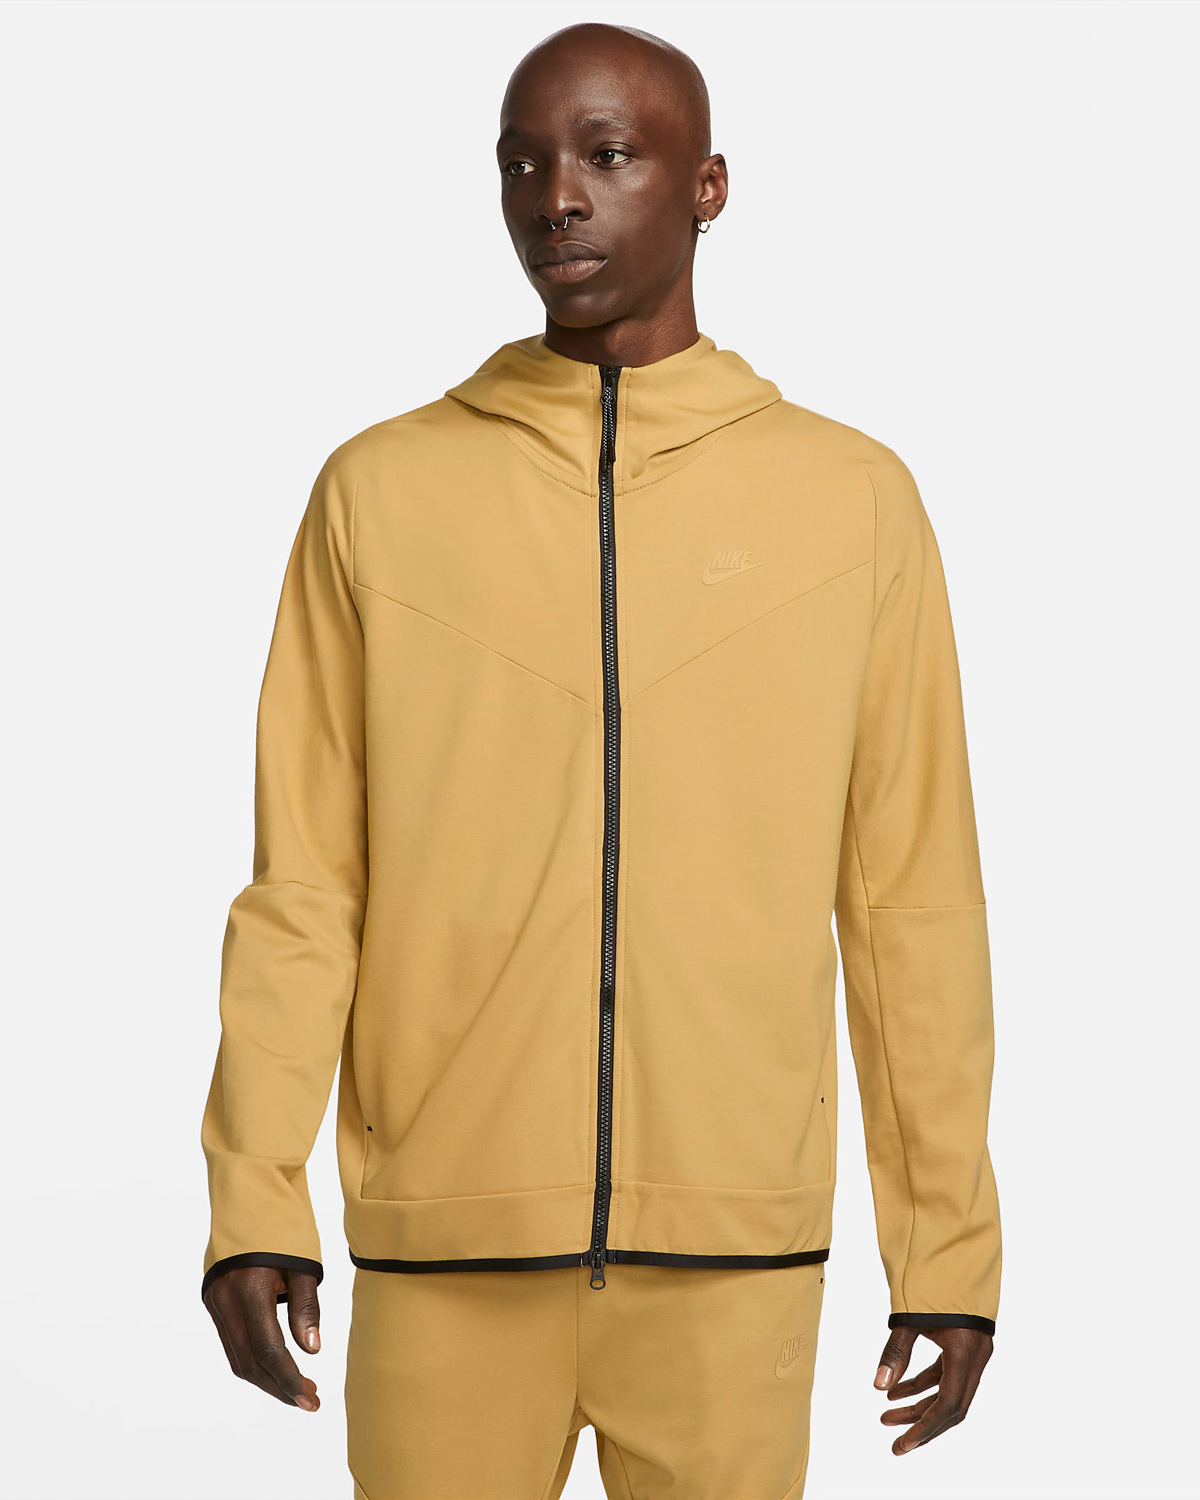 Nike-Tech-Fleece-Lightweight-Full-Zip-Hooded-Jacket-Wheat-Gold